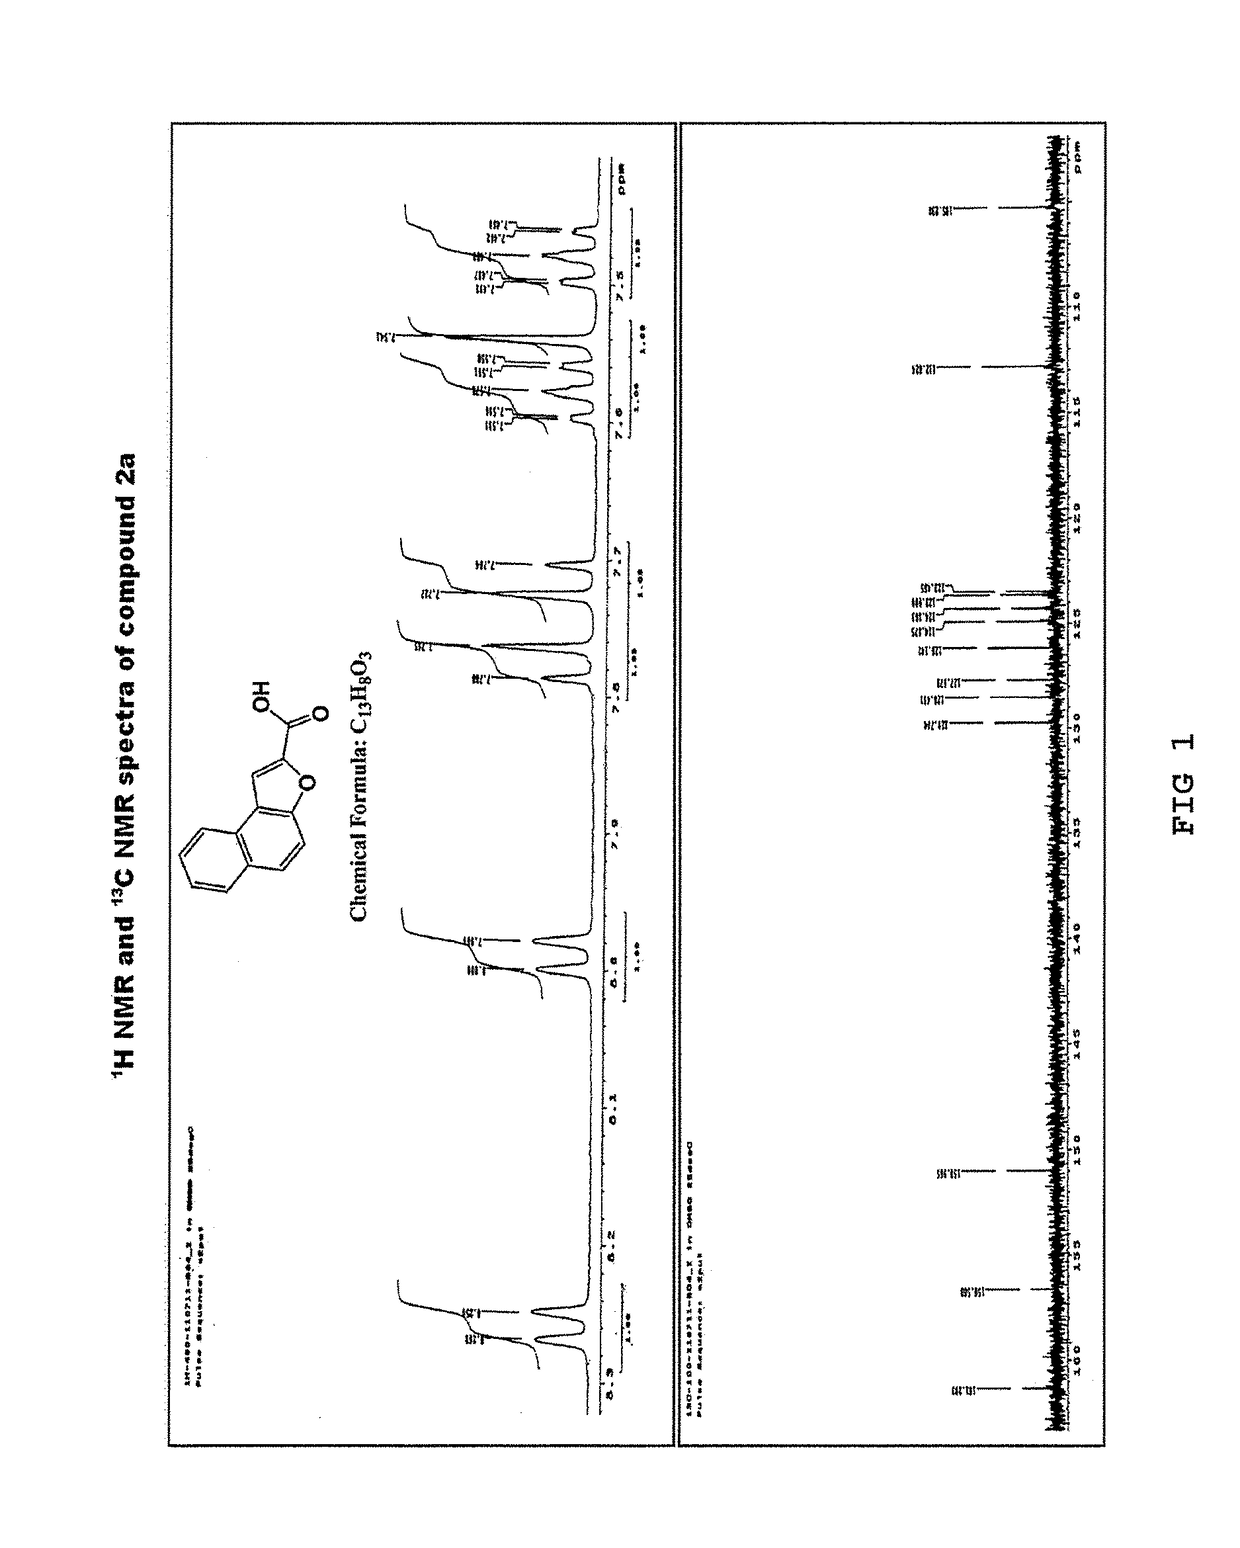 Tubulin polymerization inhibitor and method for synthesizing same